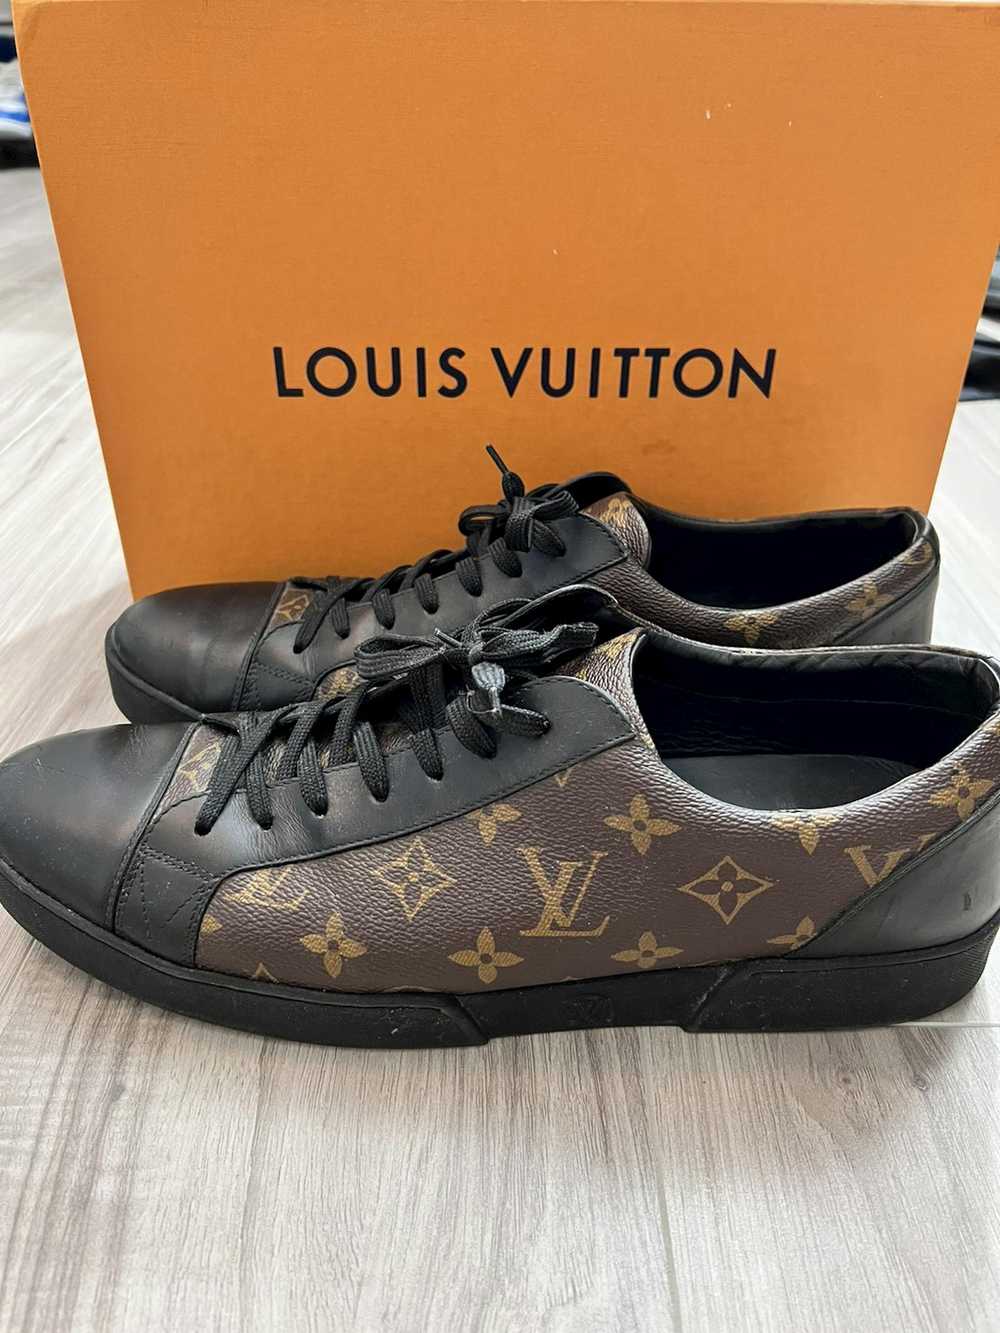 Louis Vuitton Louis Vuitton sneakers - image 5